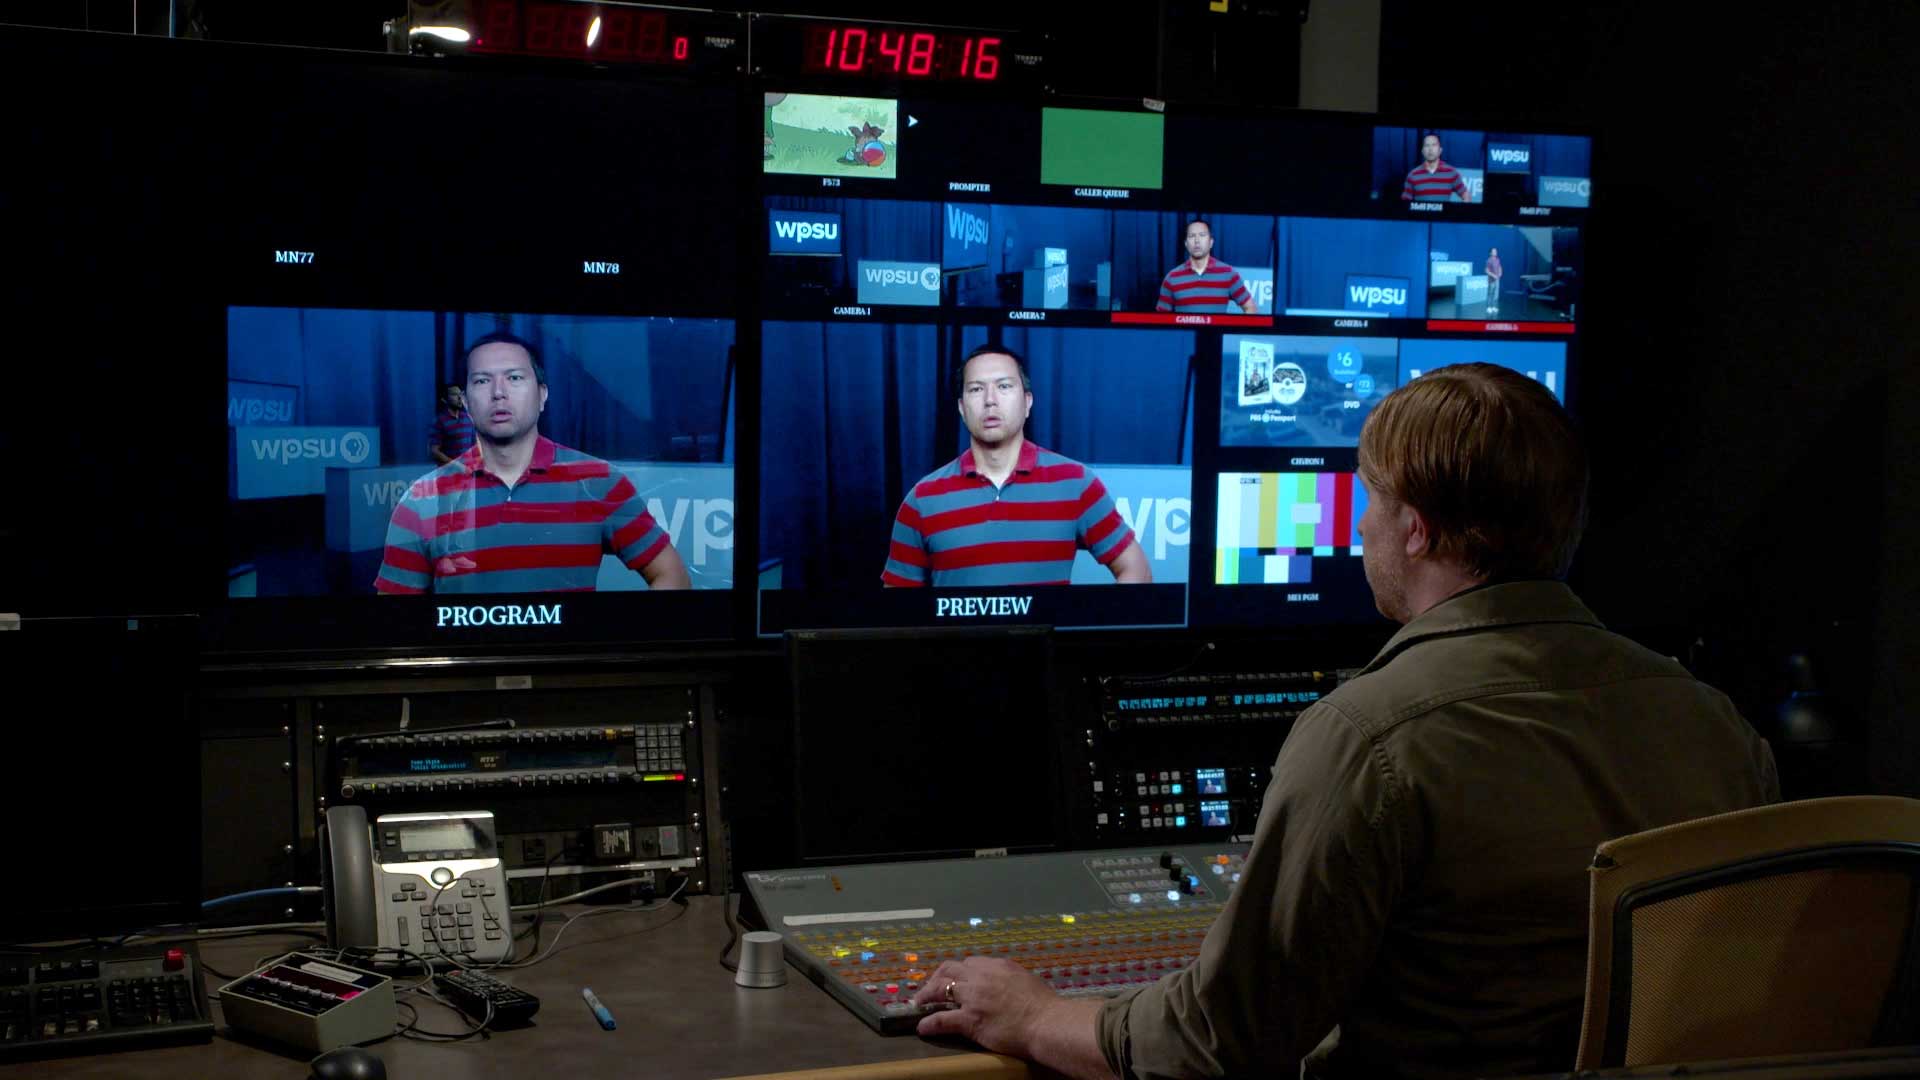 WPSU technician in a tv broadcast control room